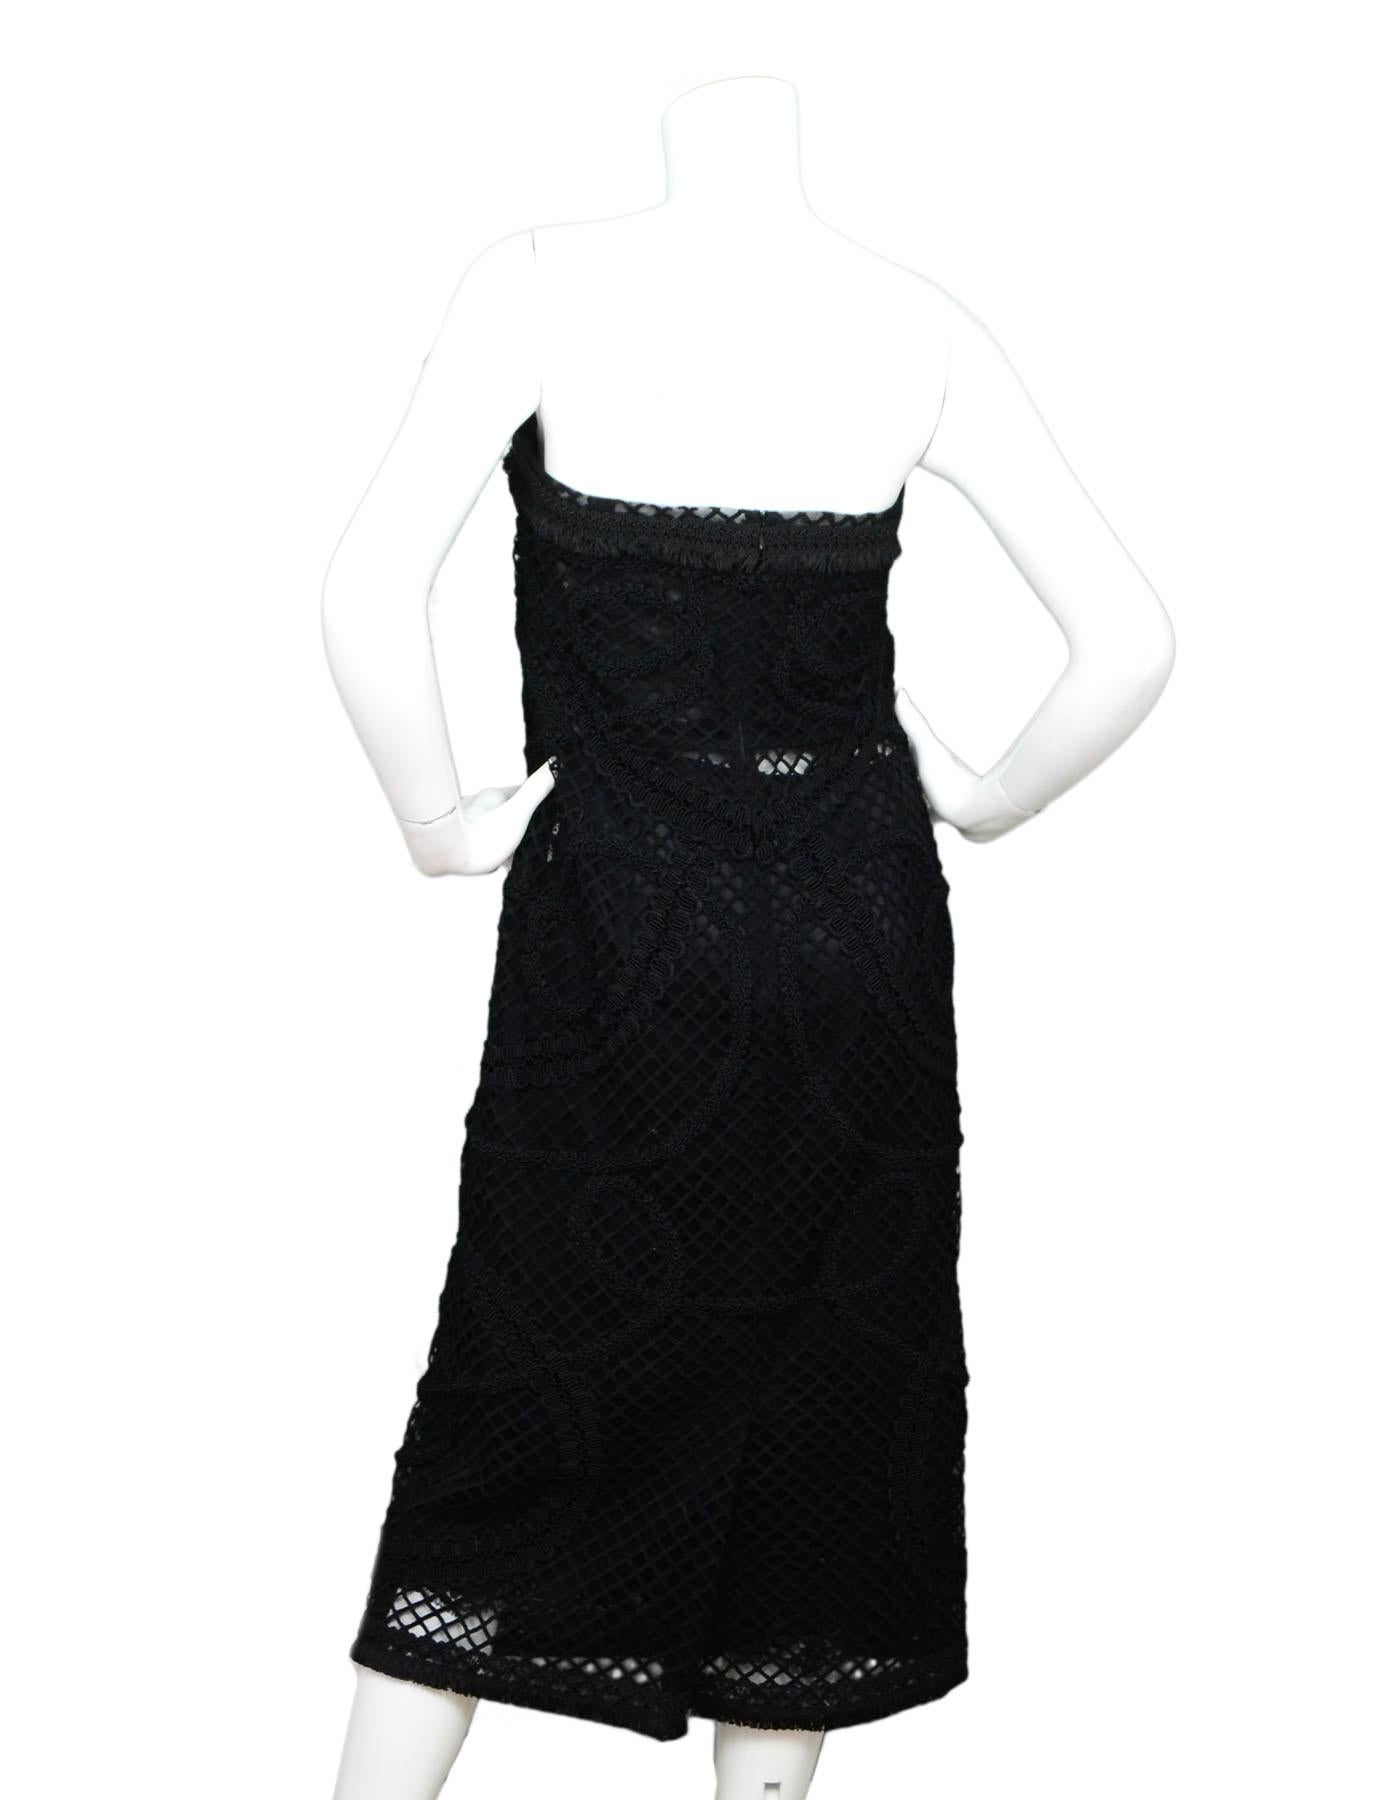 Dolce & Gabbana '15 Runway Black Embroidered Strapless Dress Sz IT48/US12 1